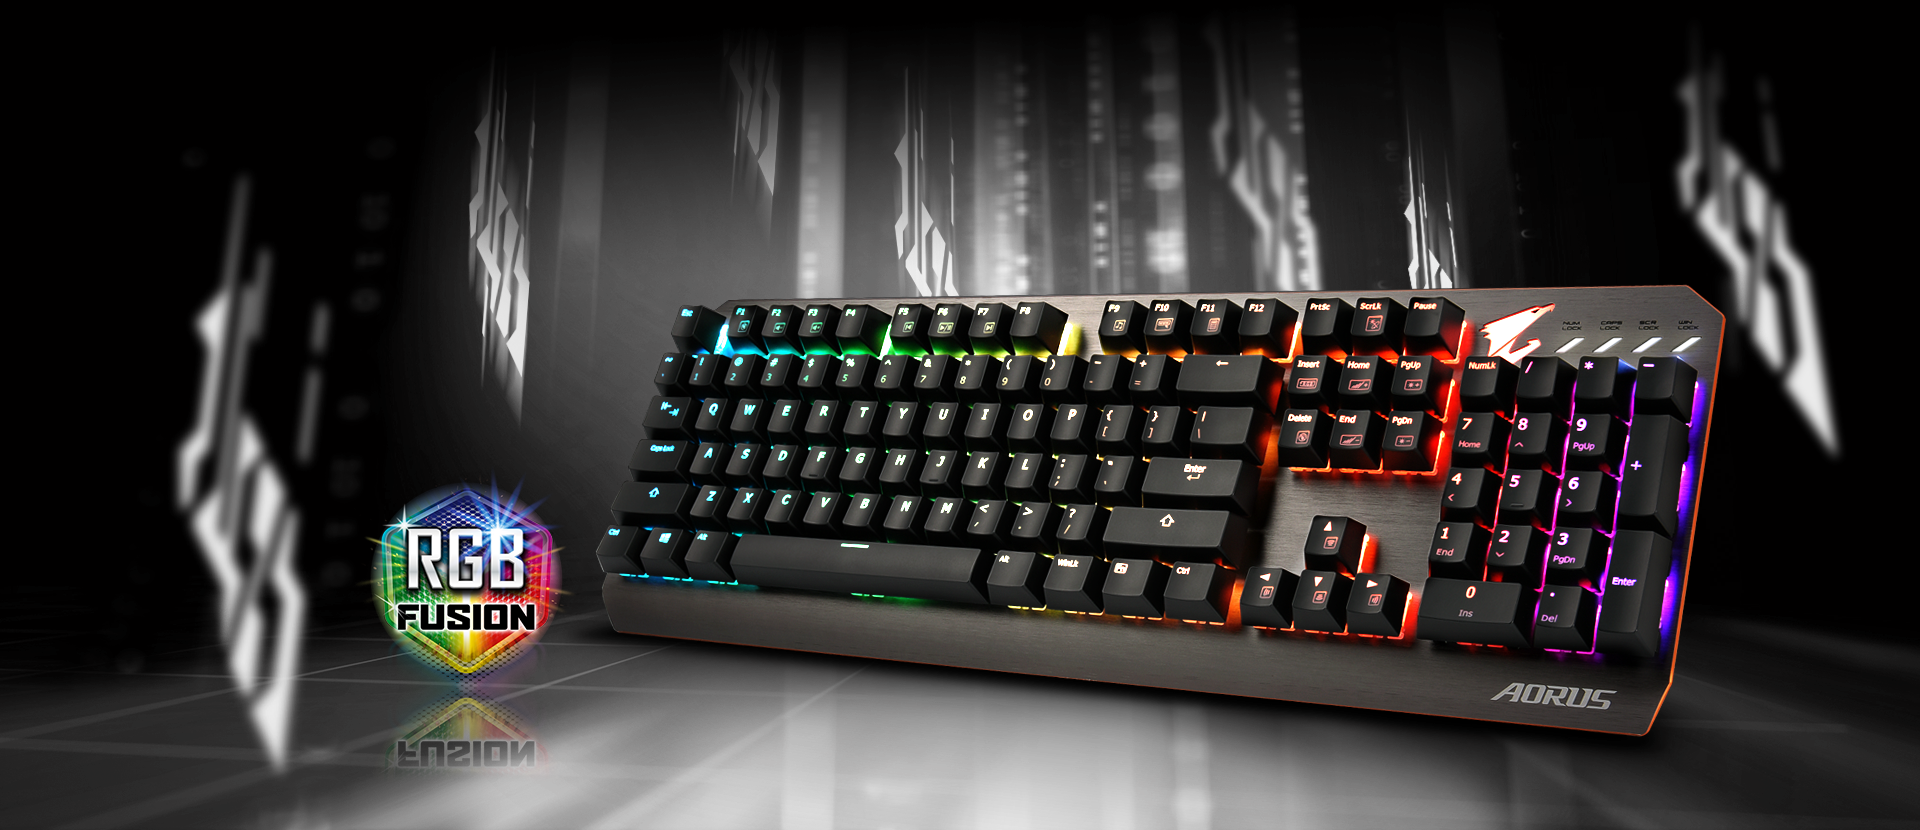 GIGABYTE AORUS K7 Mechanical Gaming Keyboard (Cherry Red)